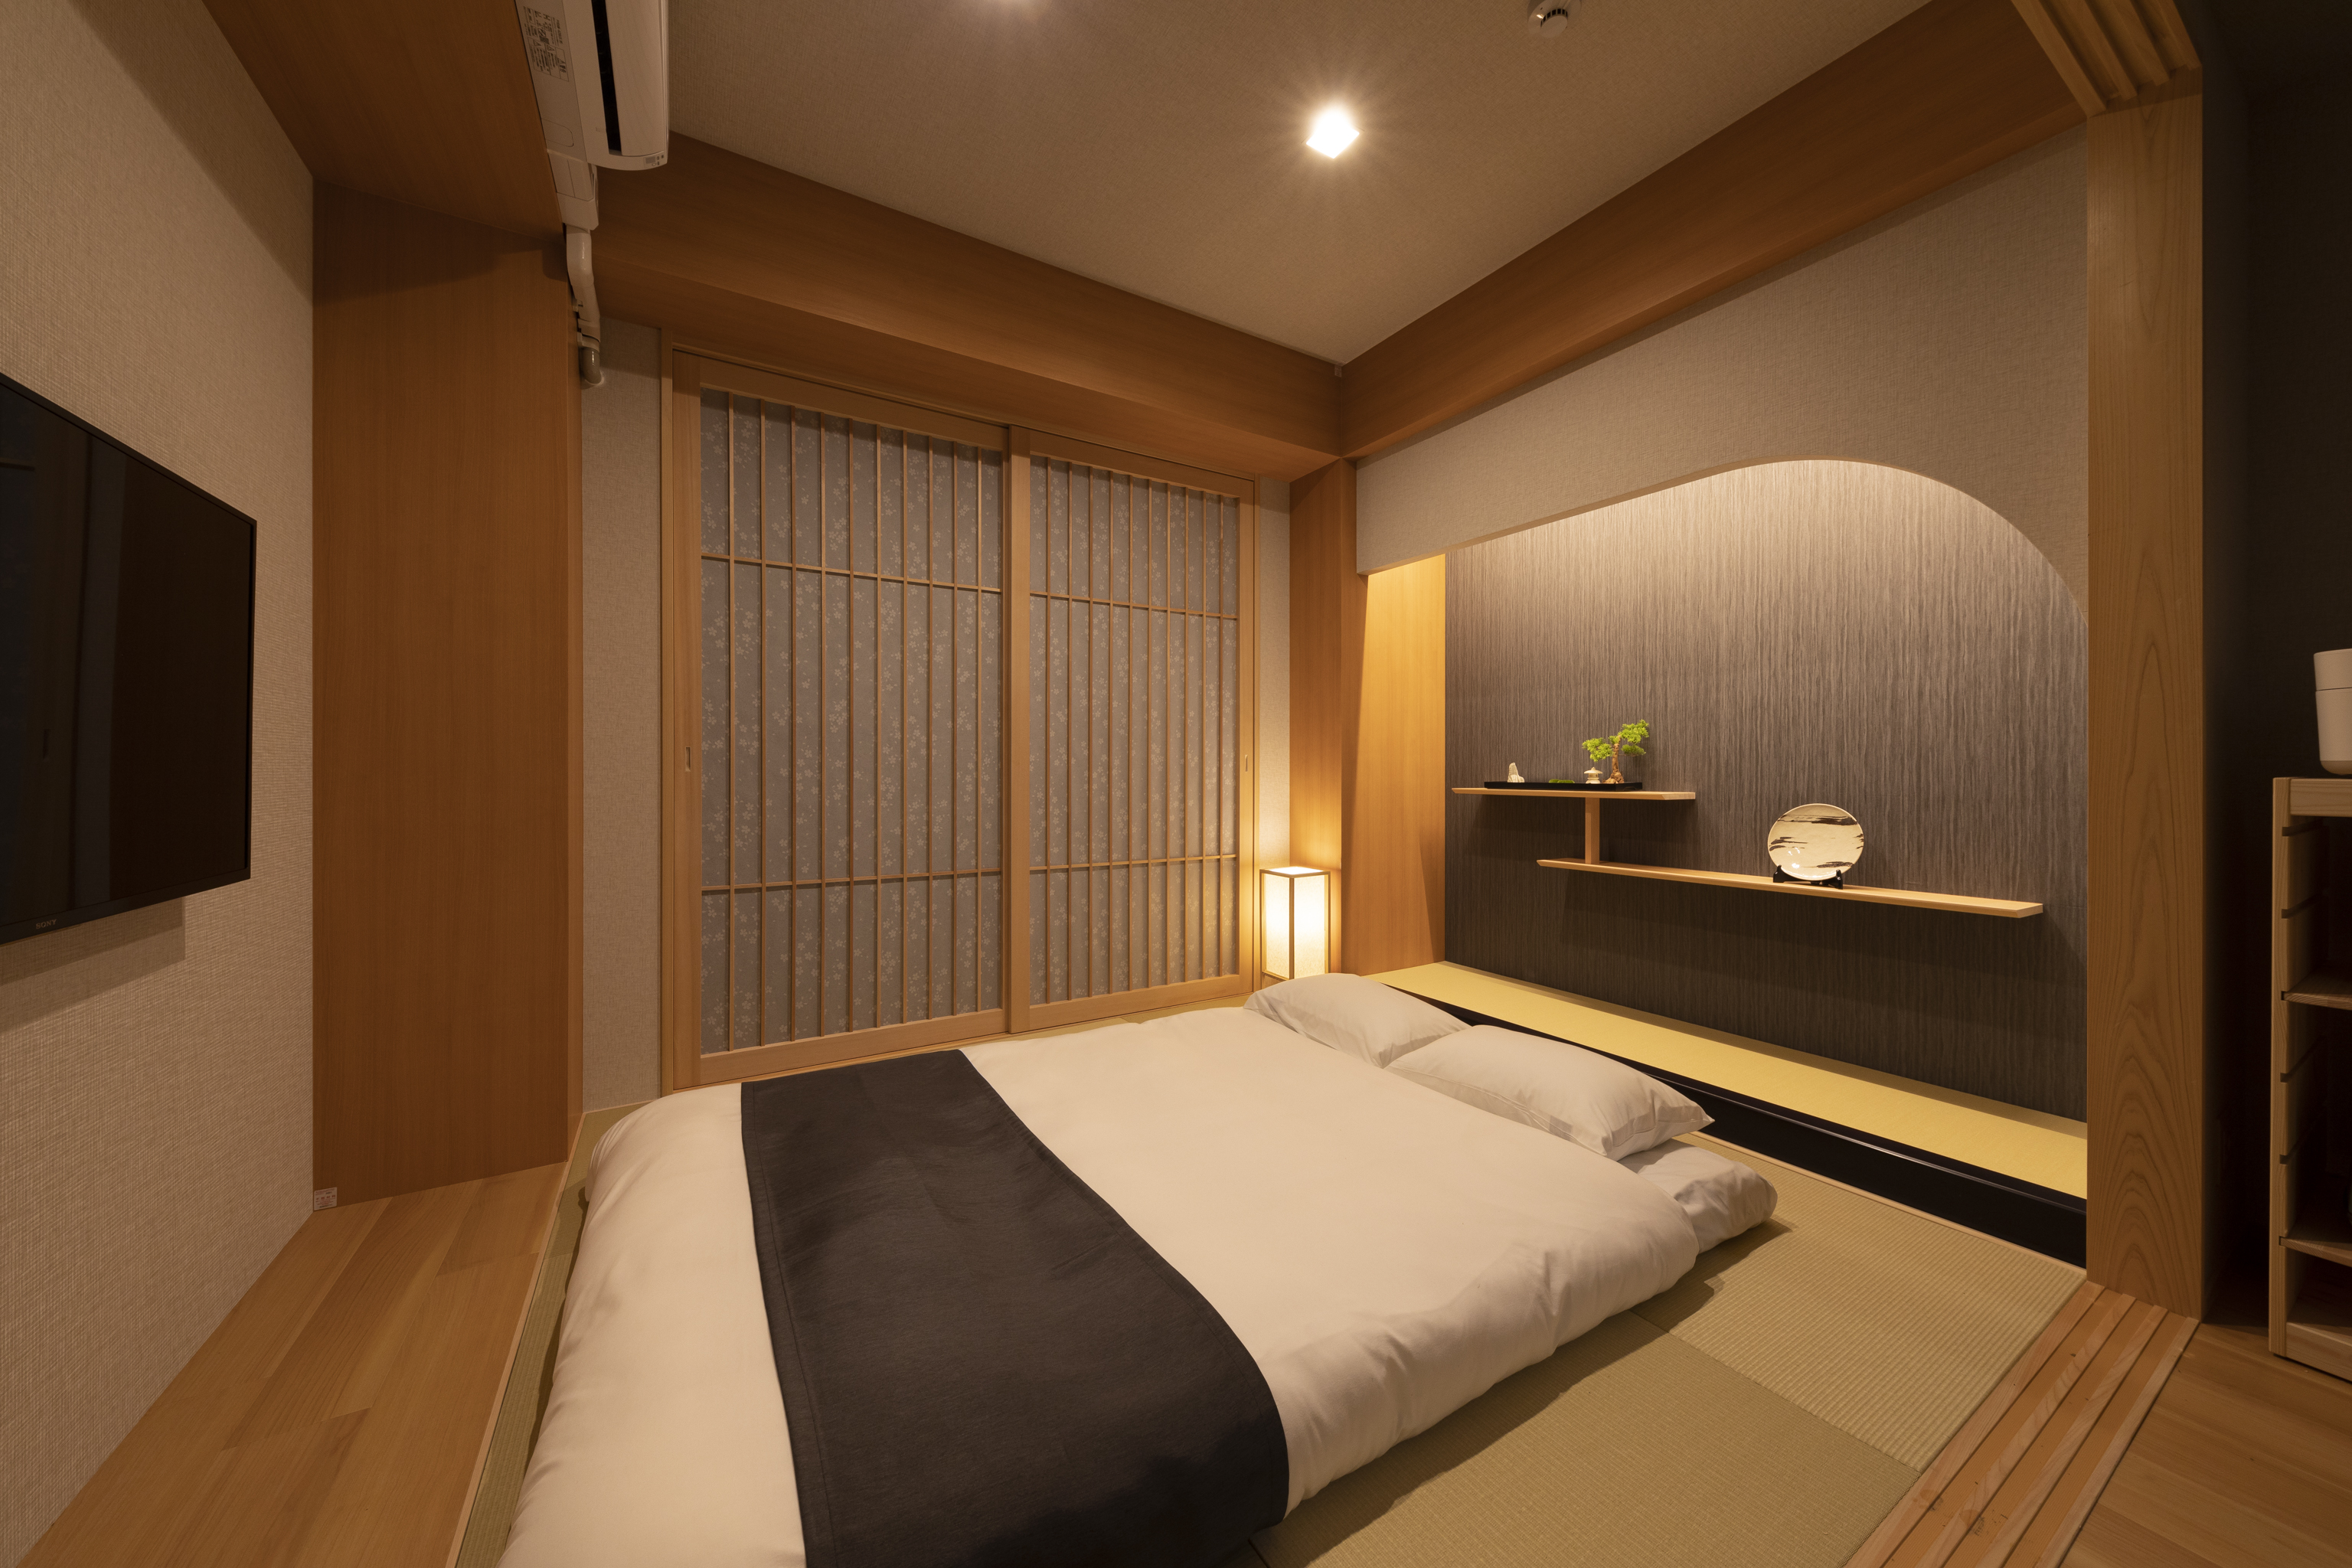 A dimly lit wood paneled bedroom